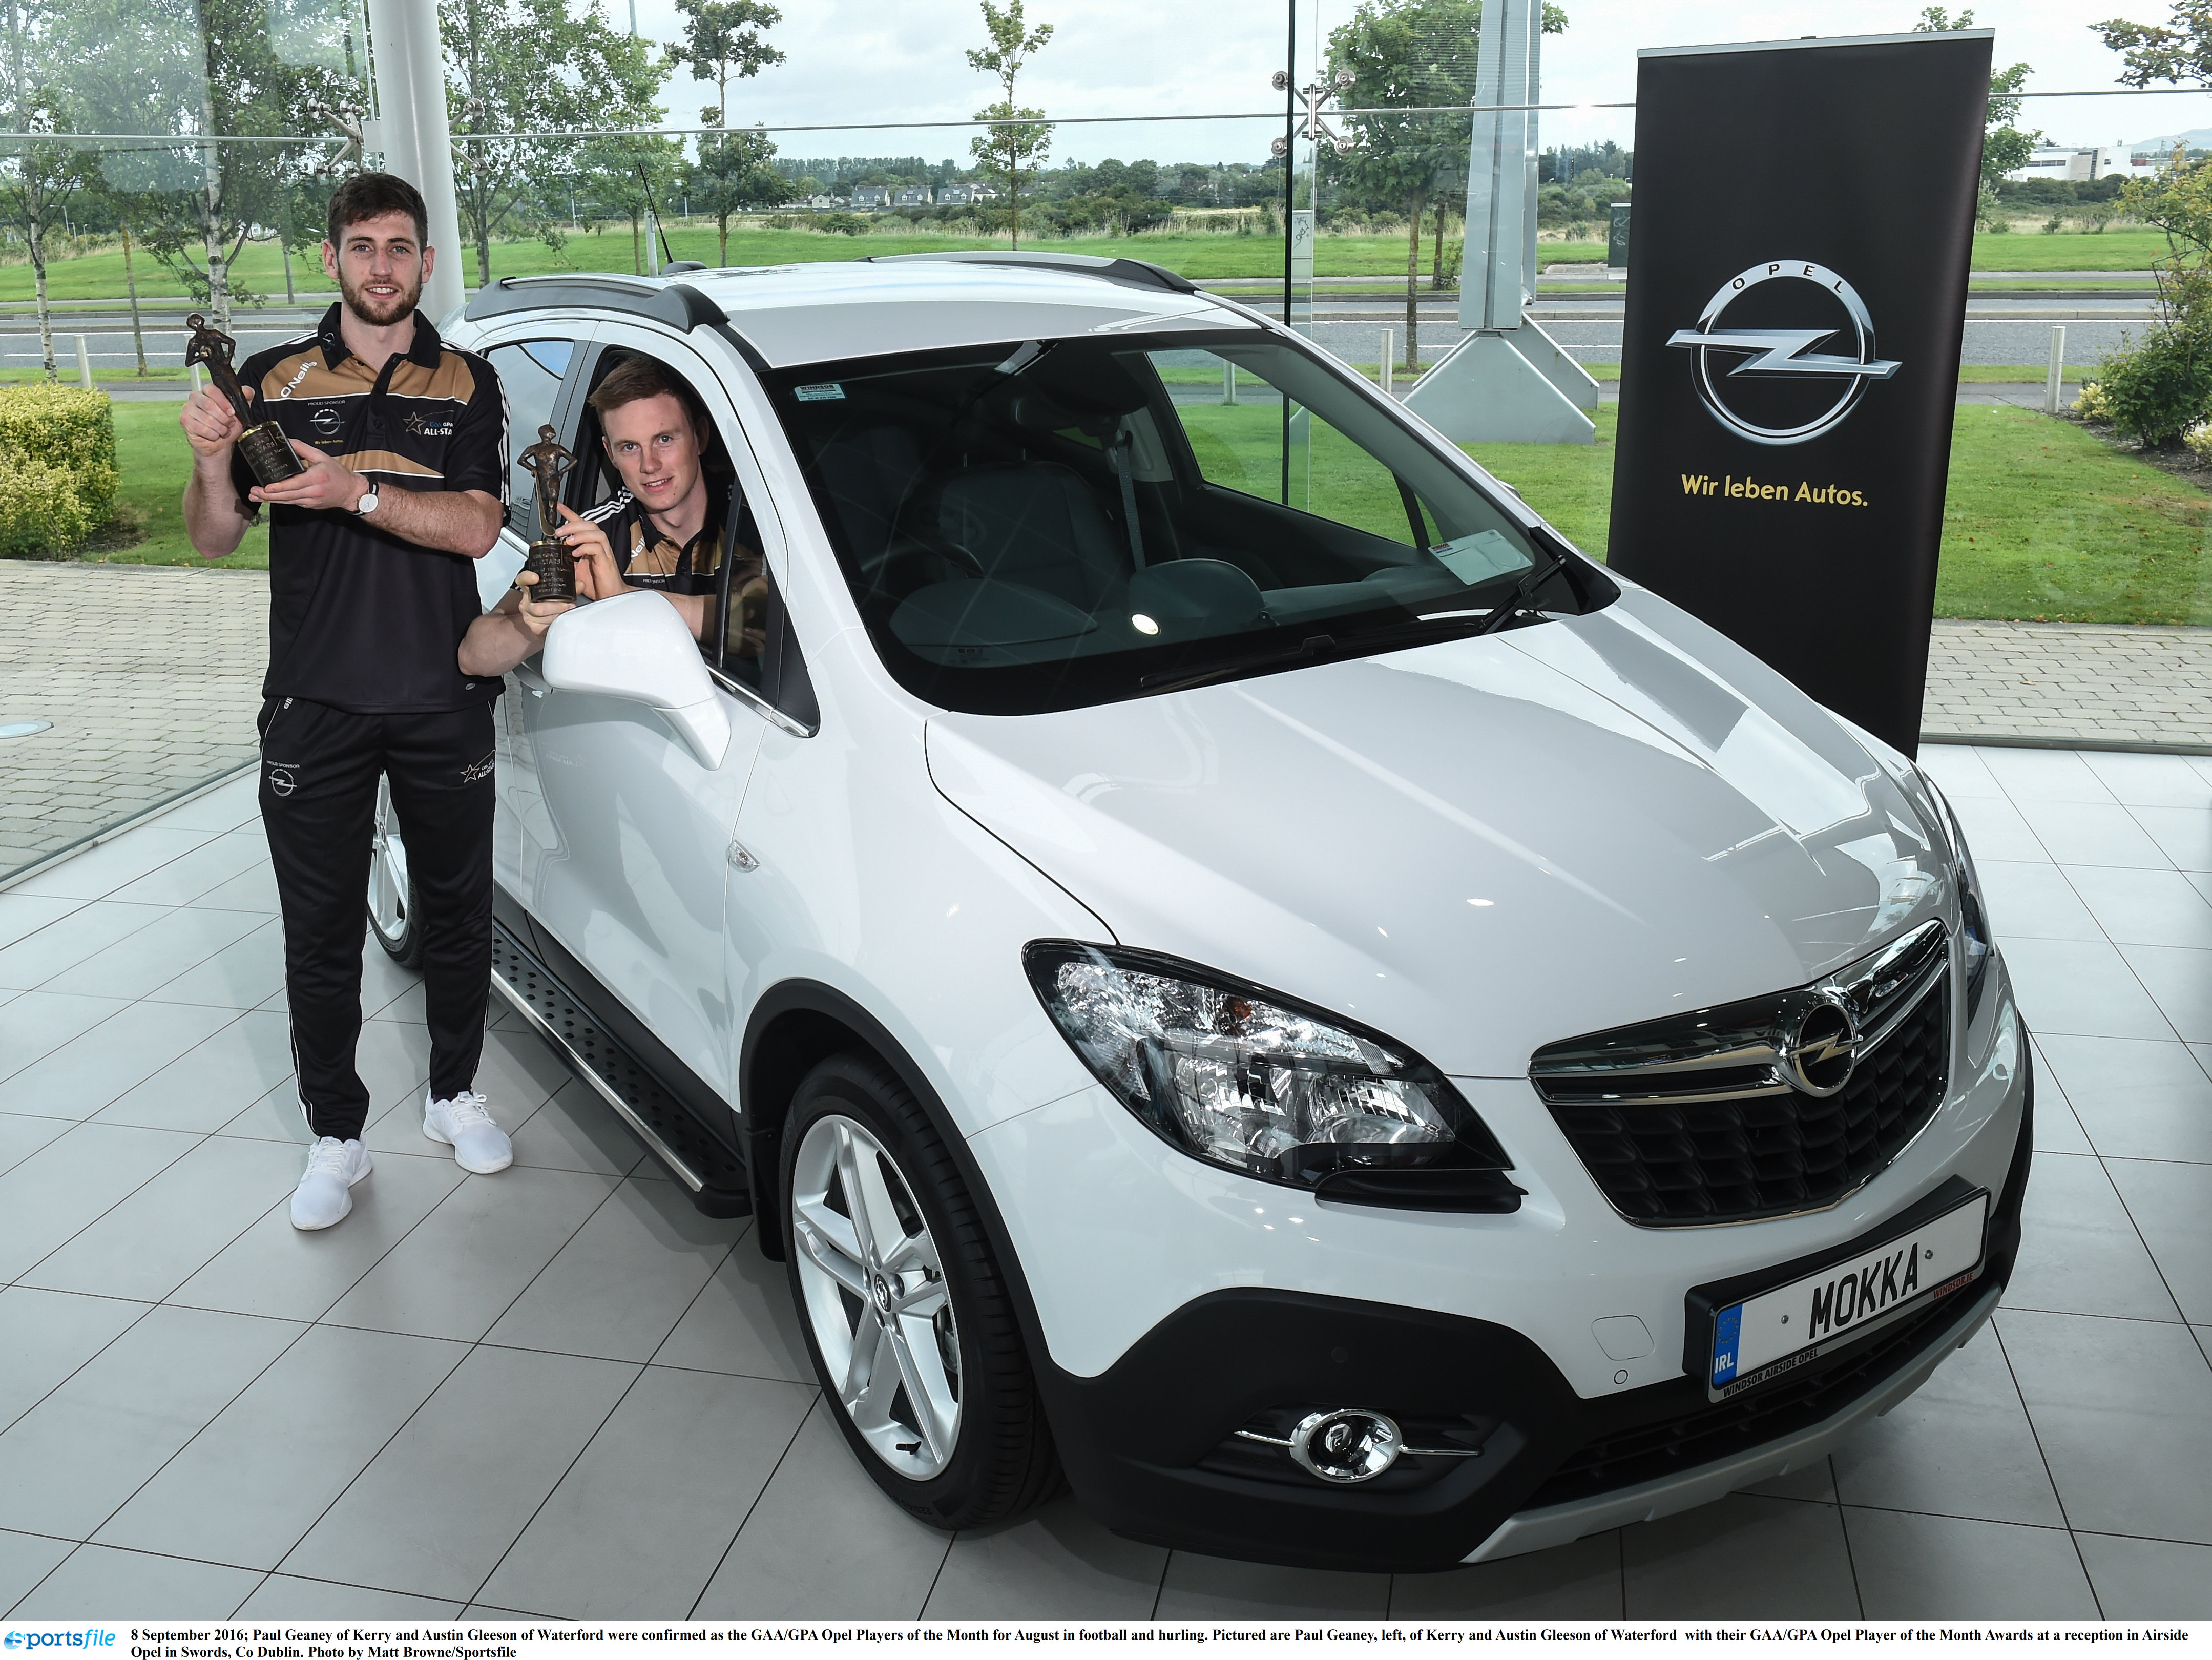 Paul Geaney, Austin Gleeson, GAA/GPA Opel Players of the Month,